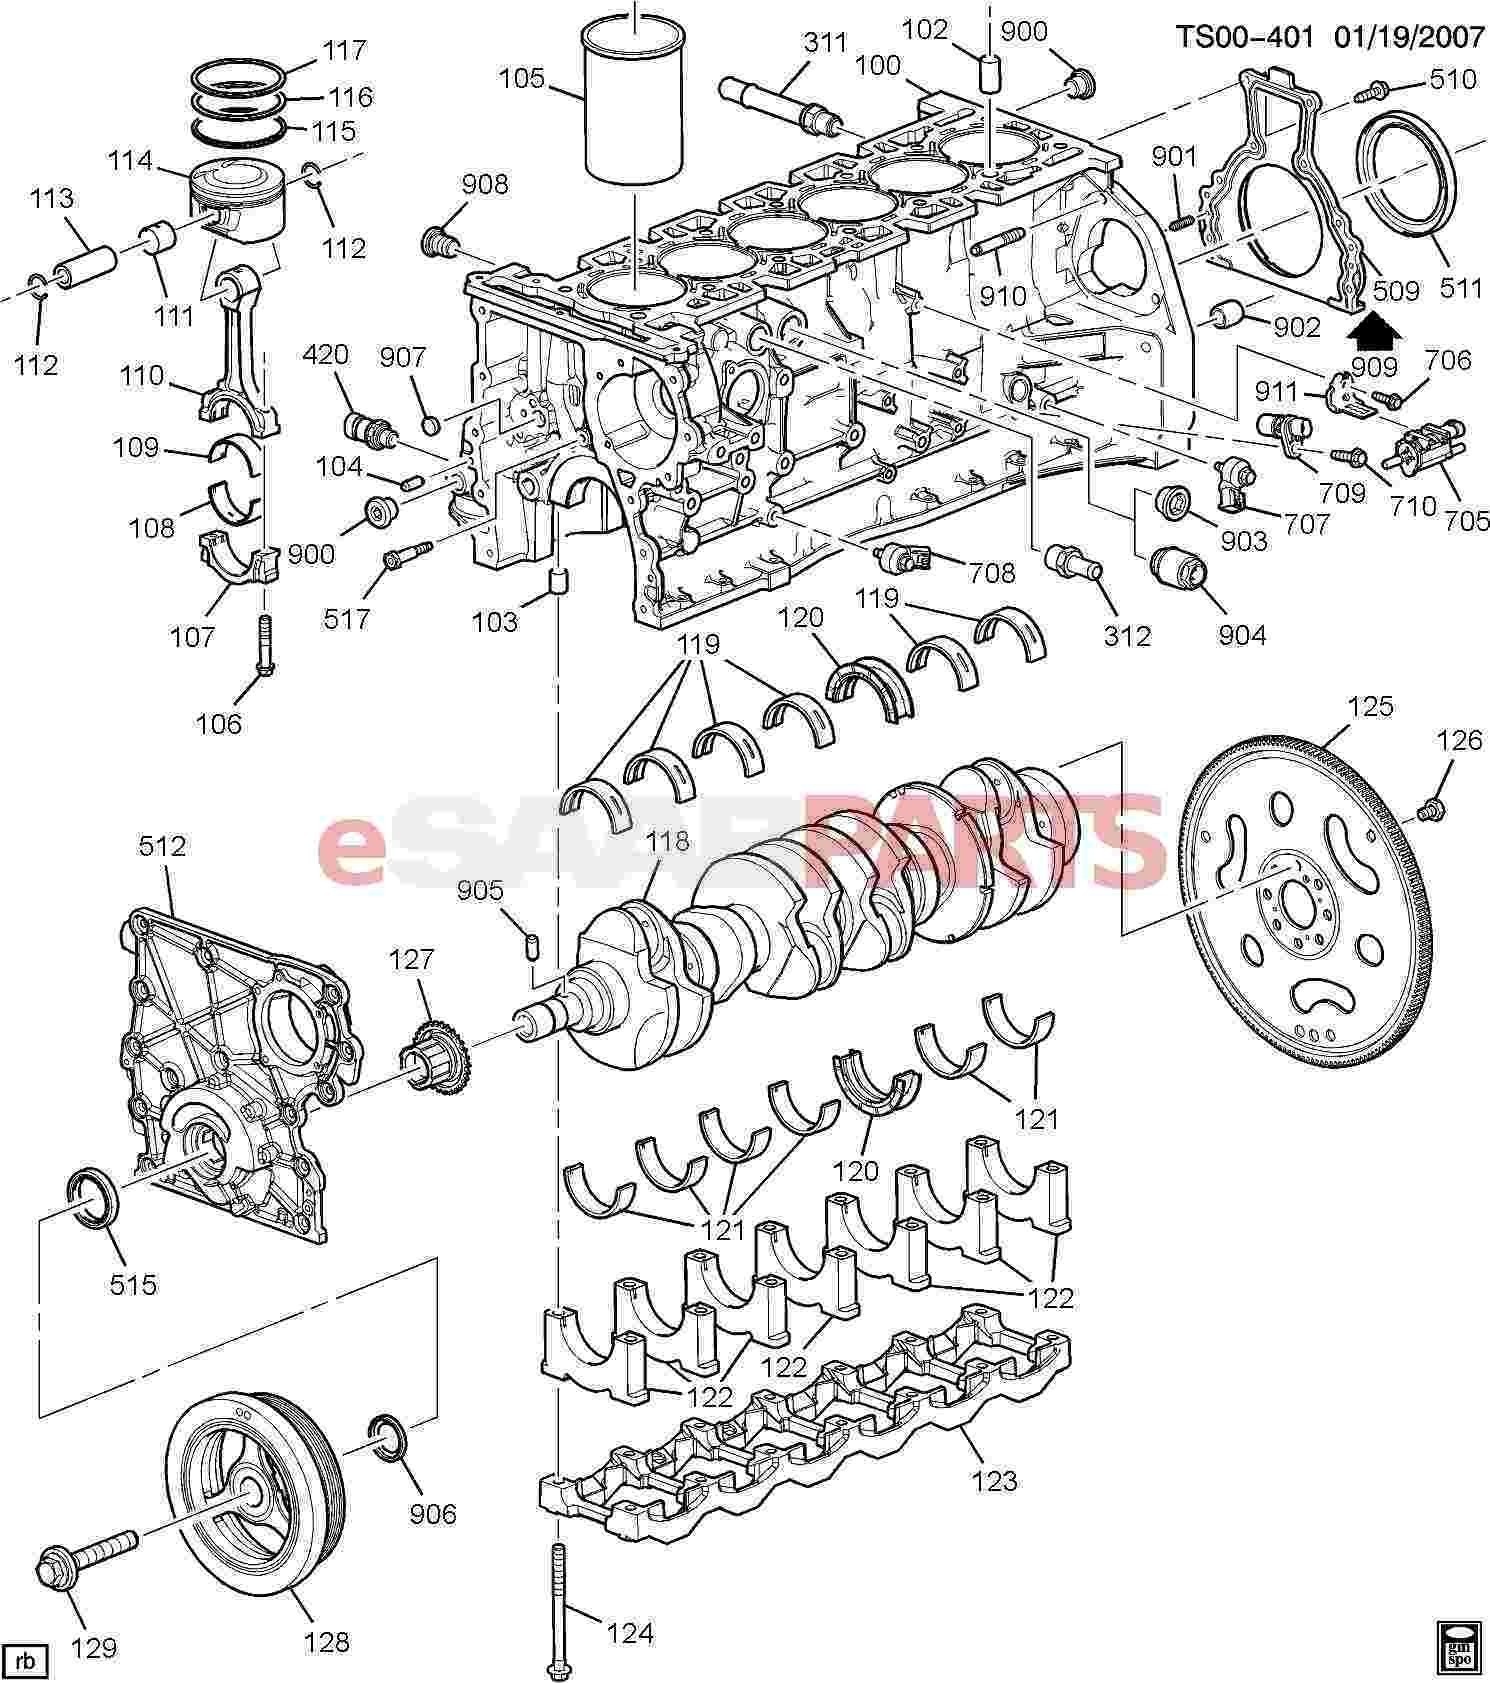 Engine Diagram Labeled Parts Engine Diagram Car Parts Labeled Diagram – My Wiring Diagram Of Engine Diagram Labeled